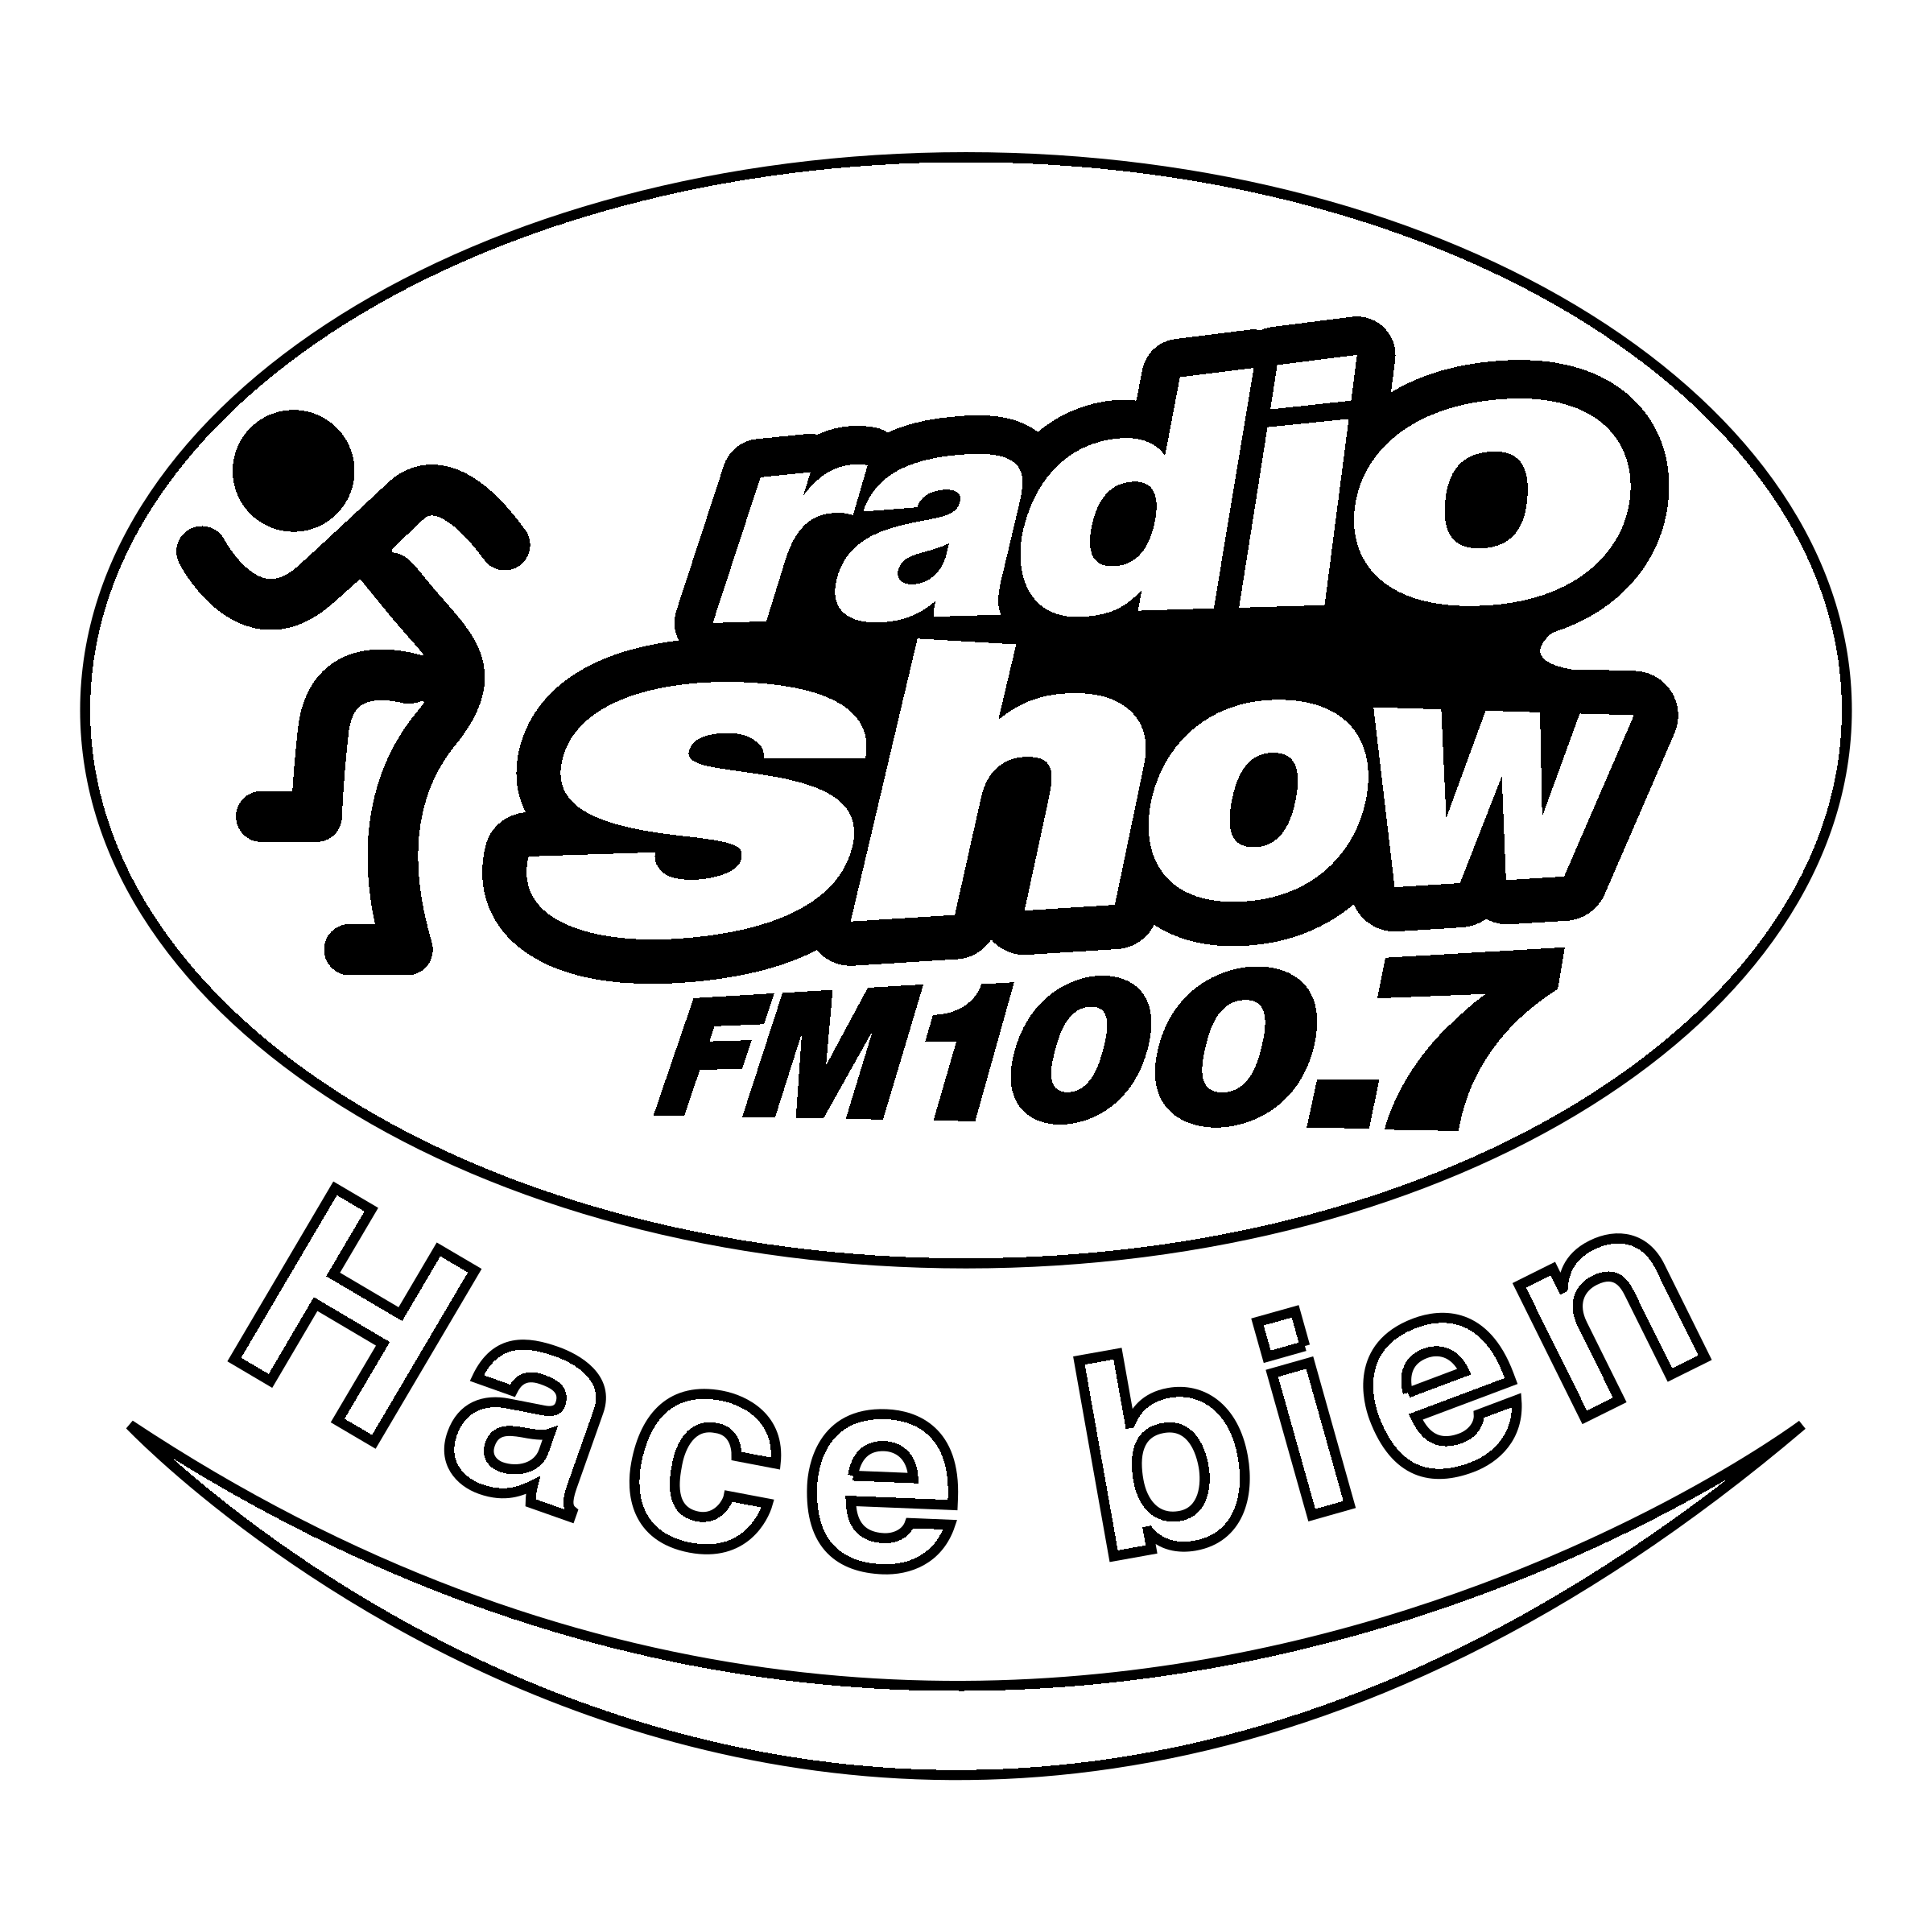 Radio Show Logo - Radio Show Logo PNG Transparent & SVG Vector - Freebie Supply